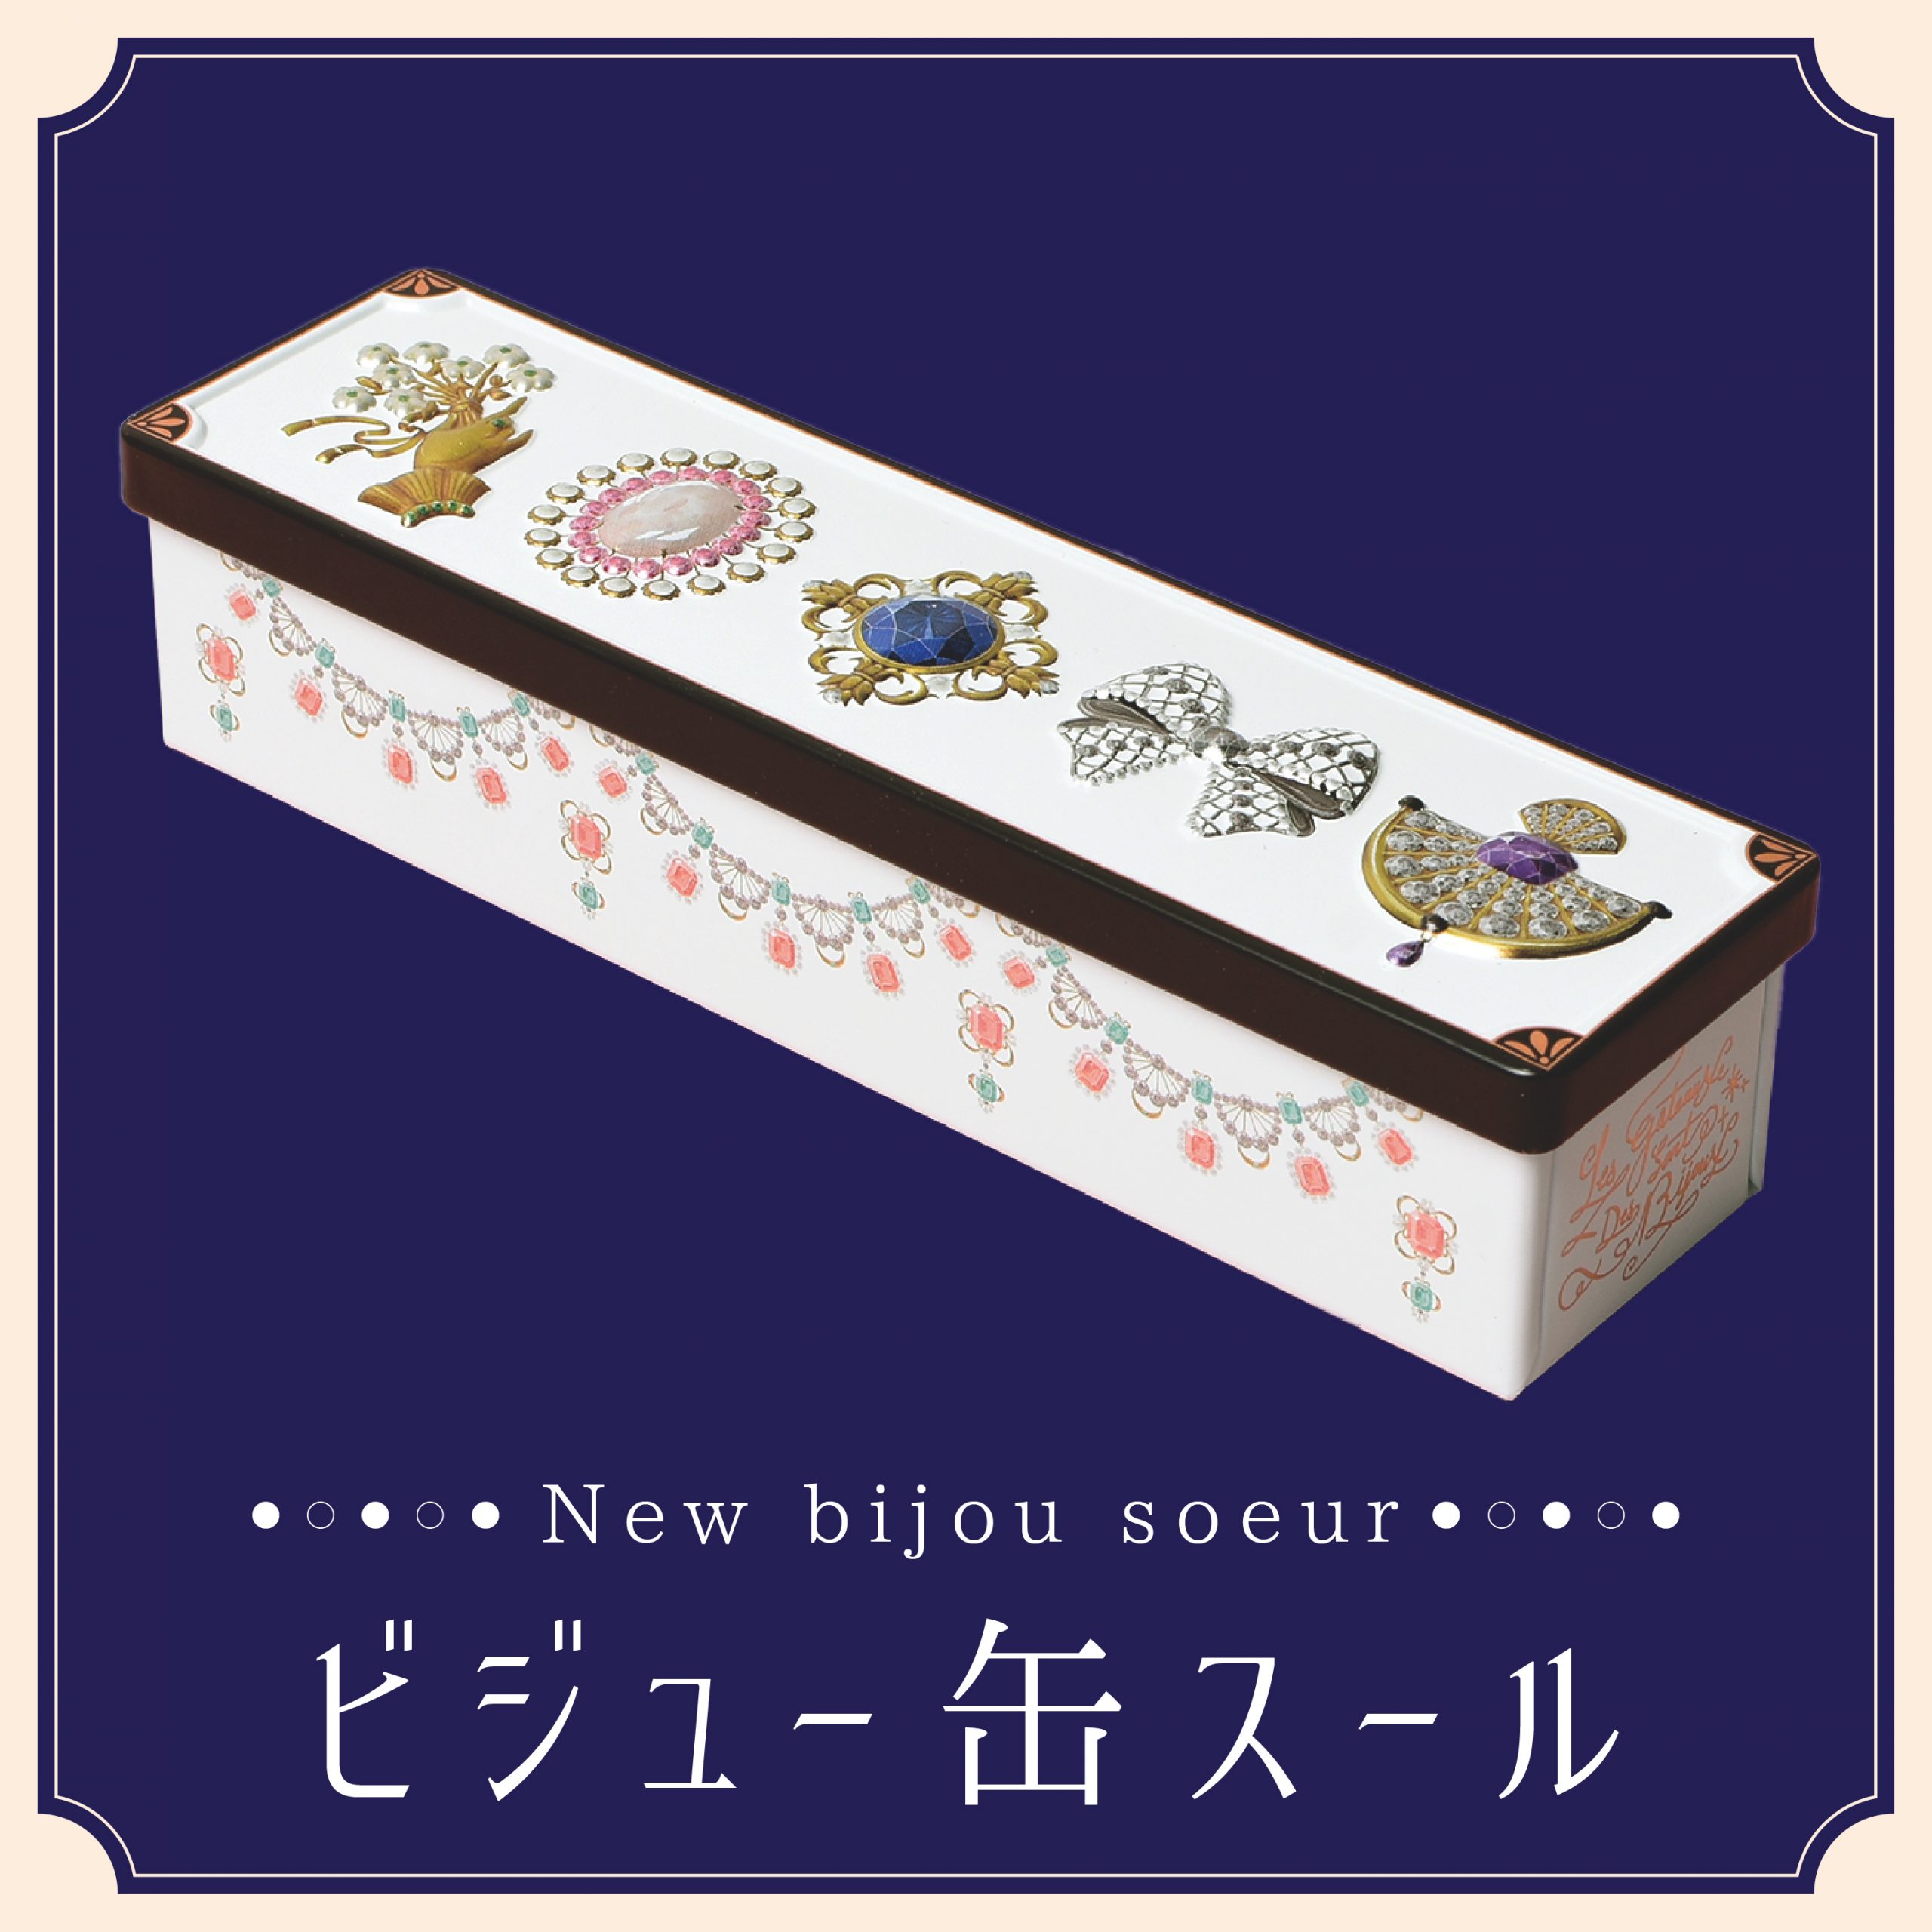 japanese jewelry box cookies, japanese jewellery cookies, chocolate cookies in jewellery box